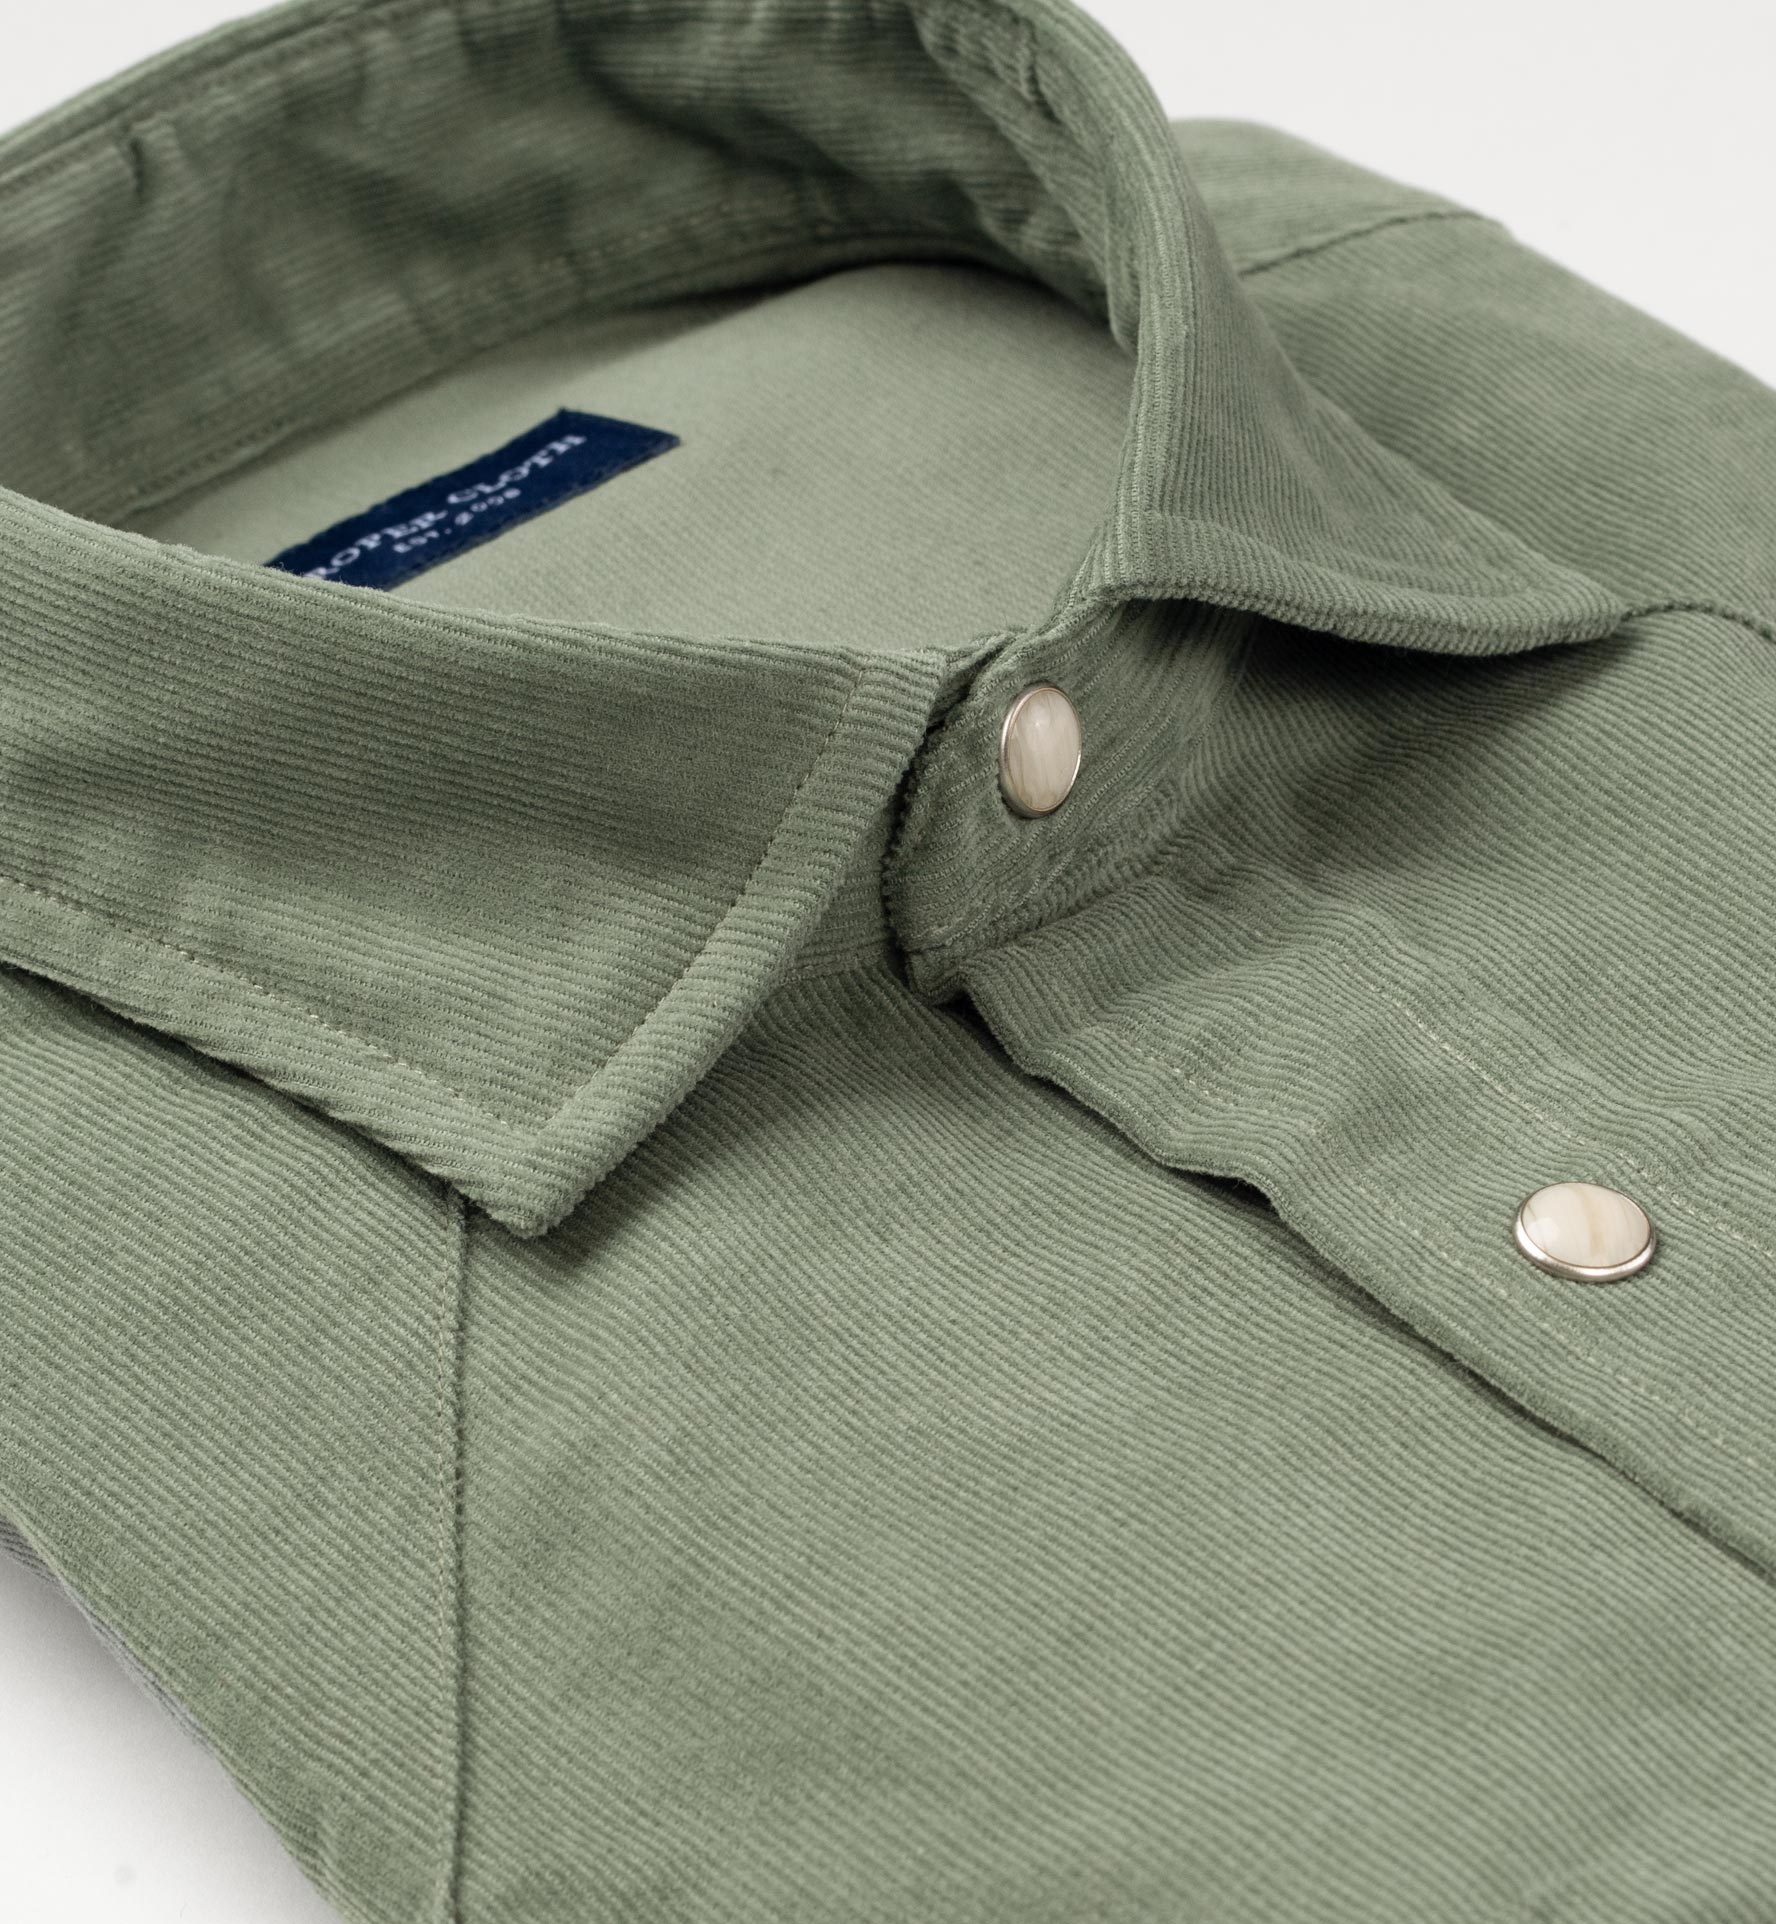 Sage Micro Corduroy Men's Dress Shirt by Proper Cloth